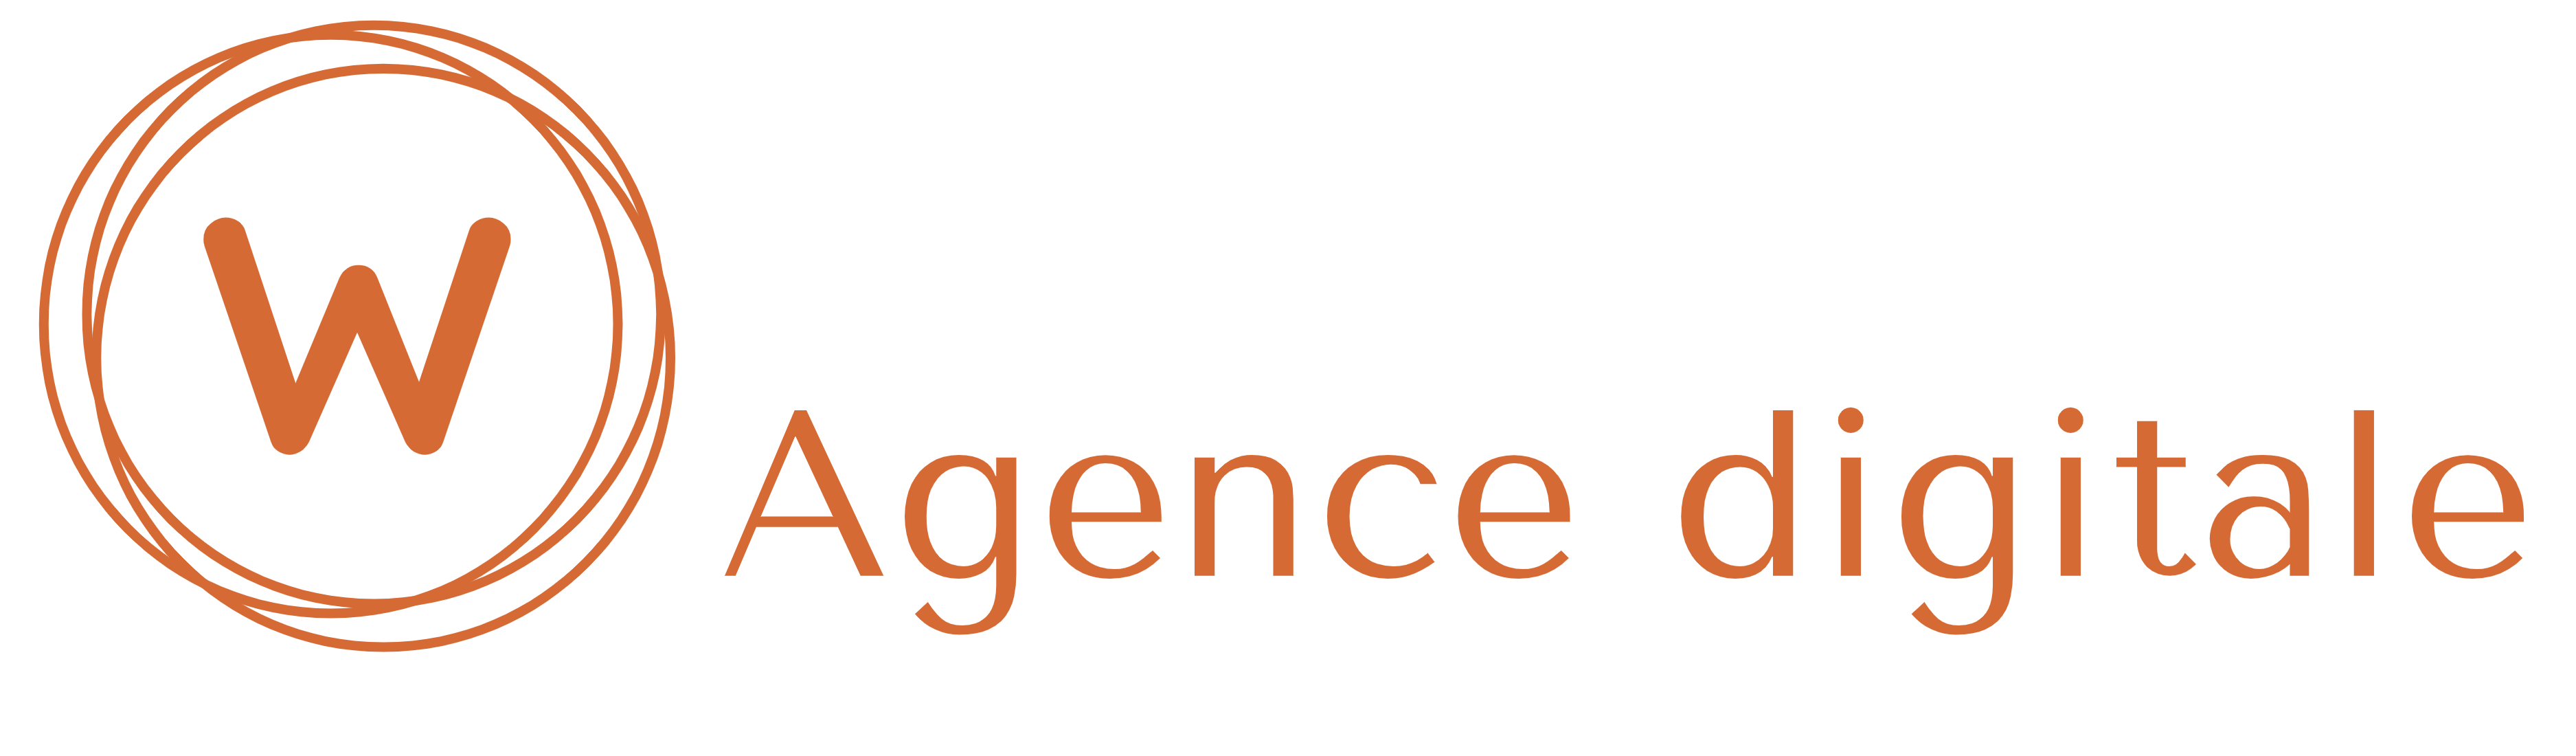 Webev, agence digitale 